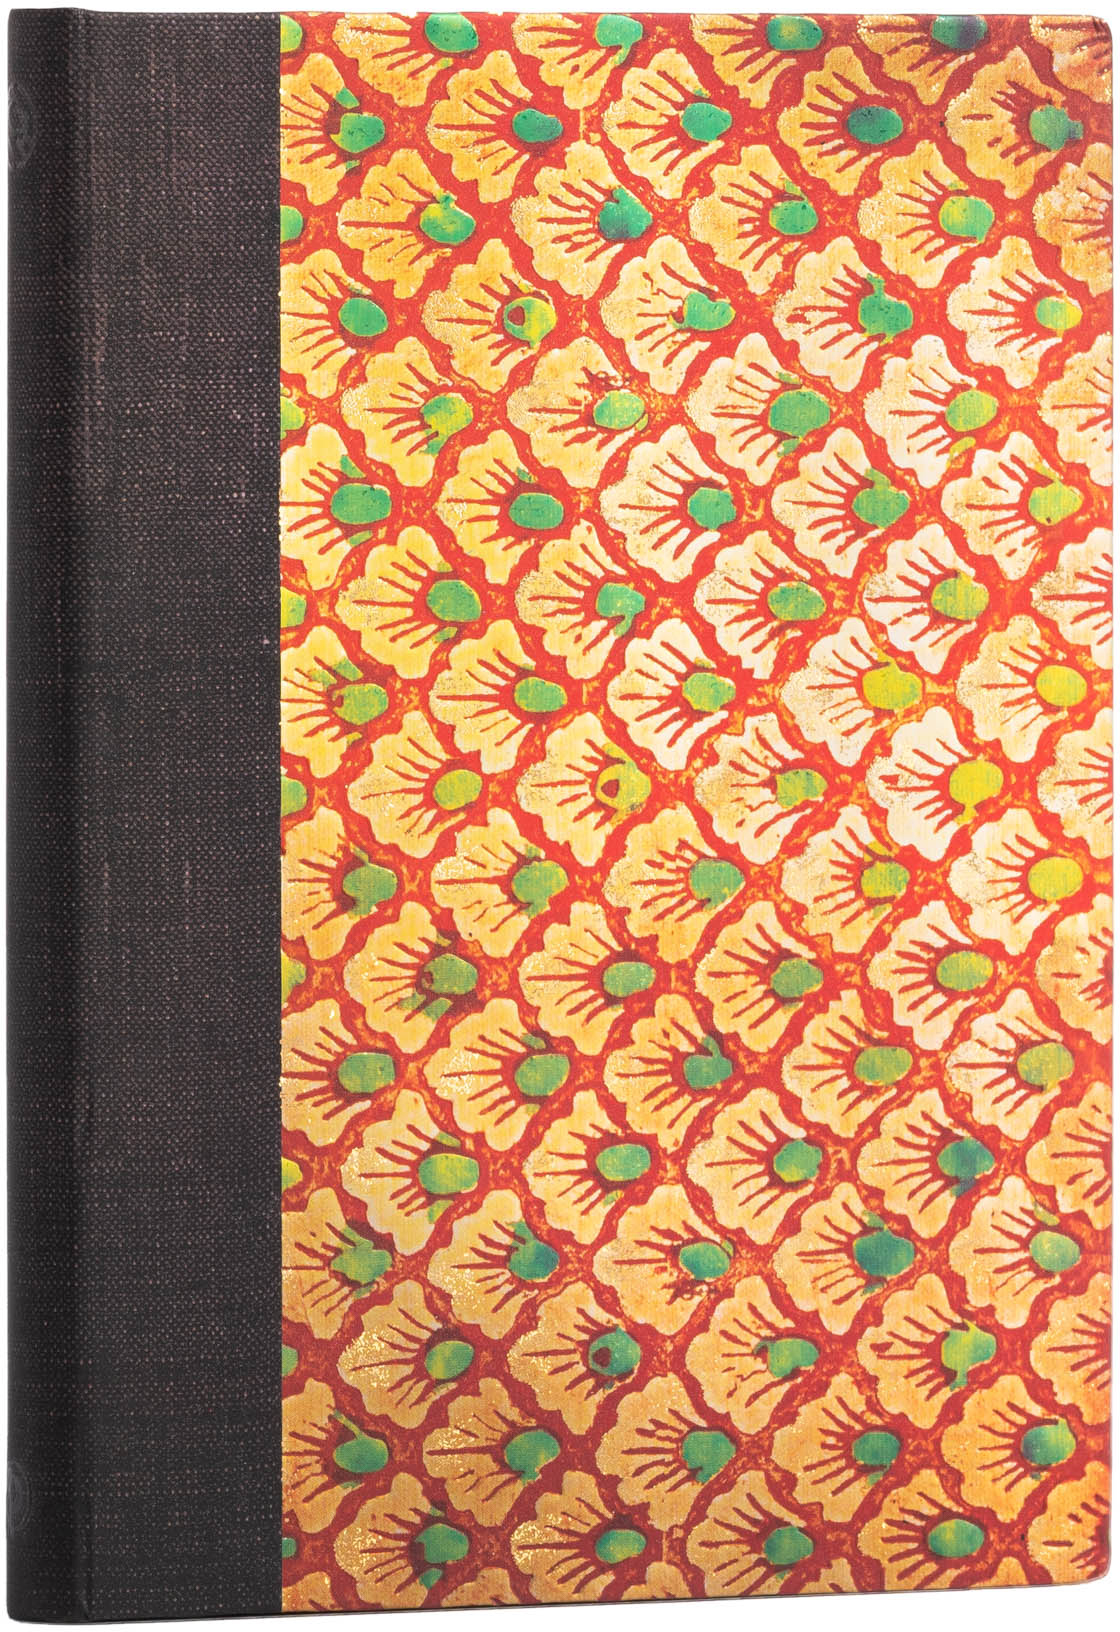 PAPERBLANKS Carnet Virginia Woolfs PB7290-4 Midi,ligné,144 pages